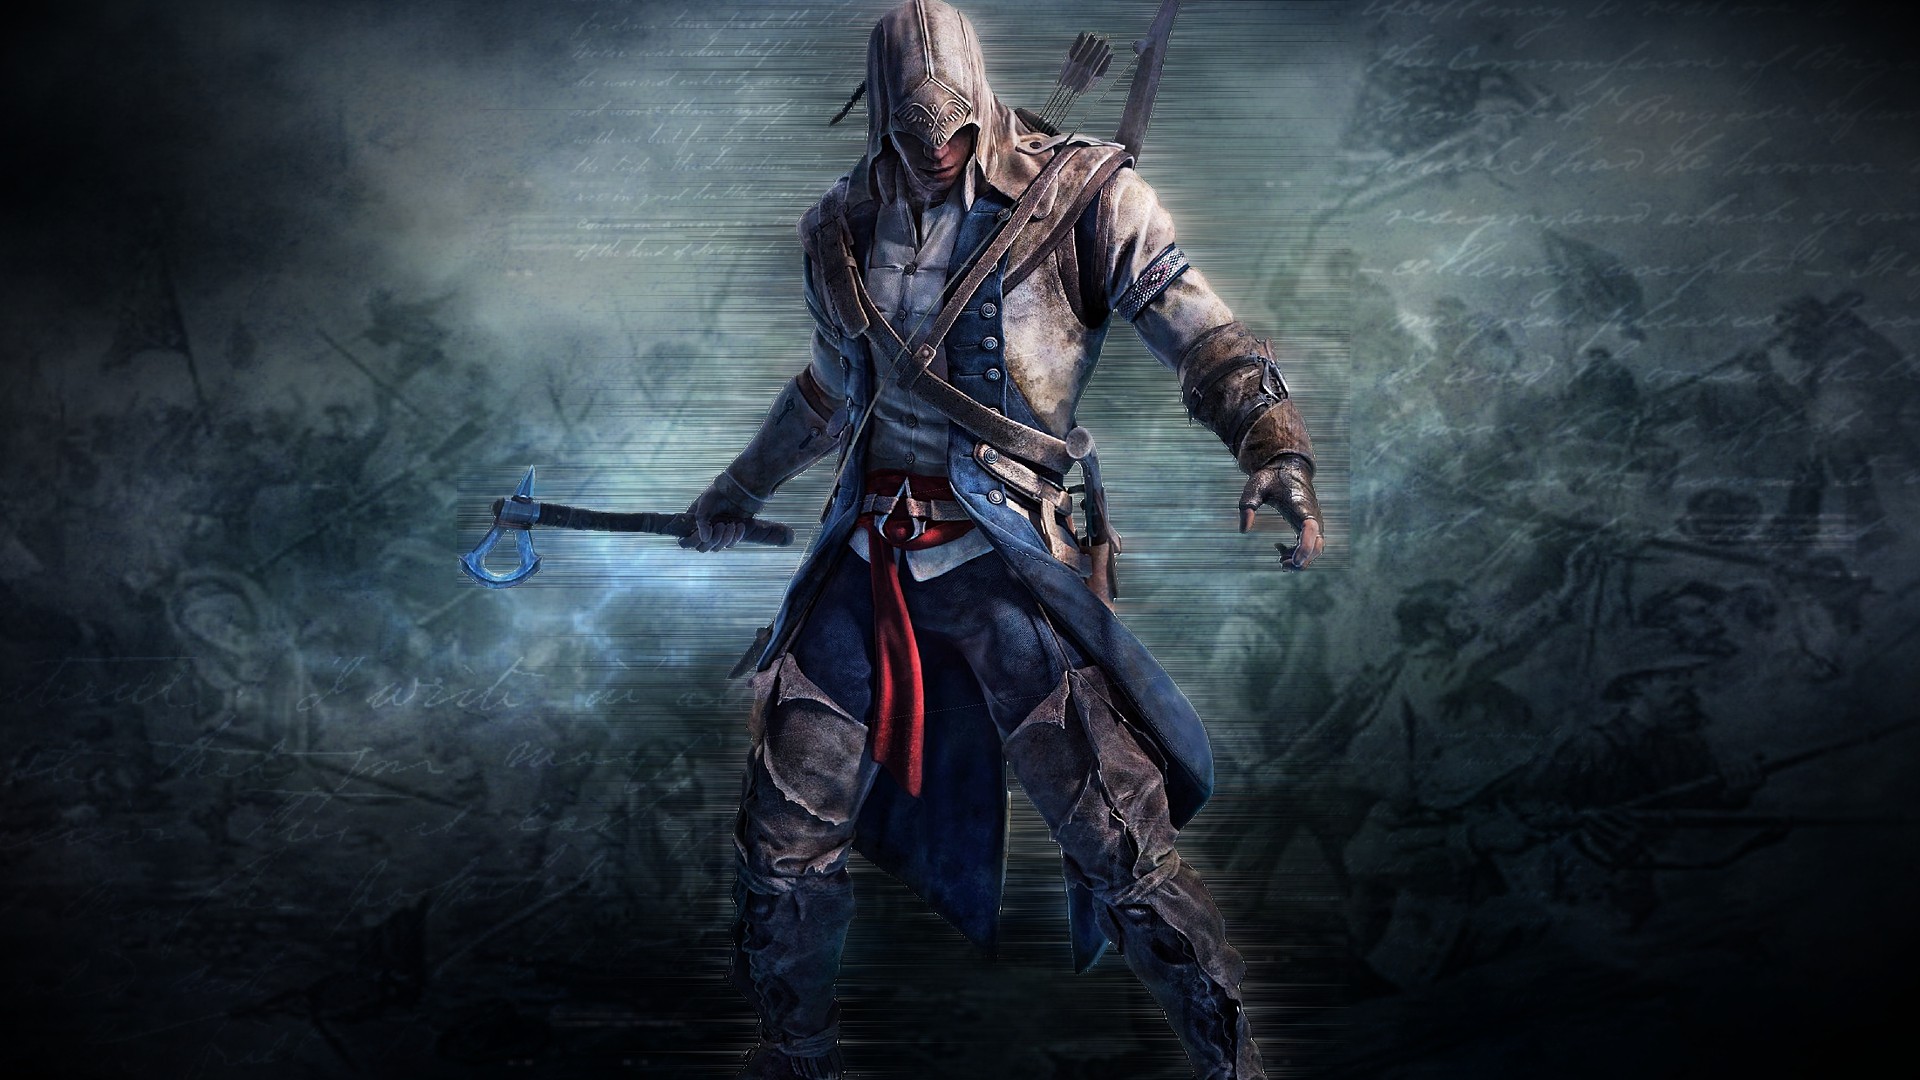 Assassins Creed 3 Wallpaper Hd 175132 1920x1080